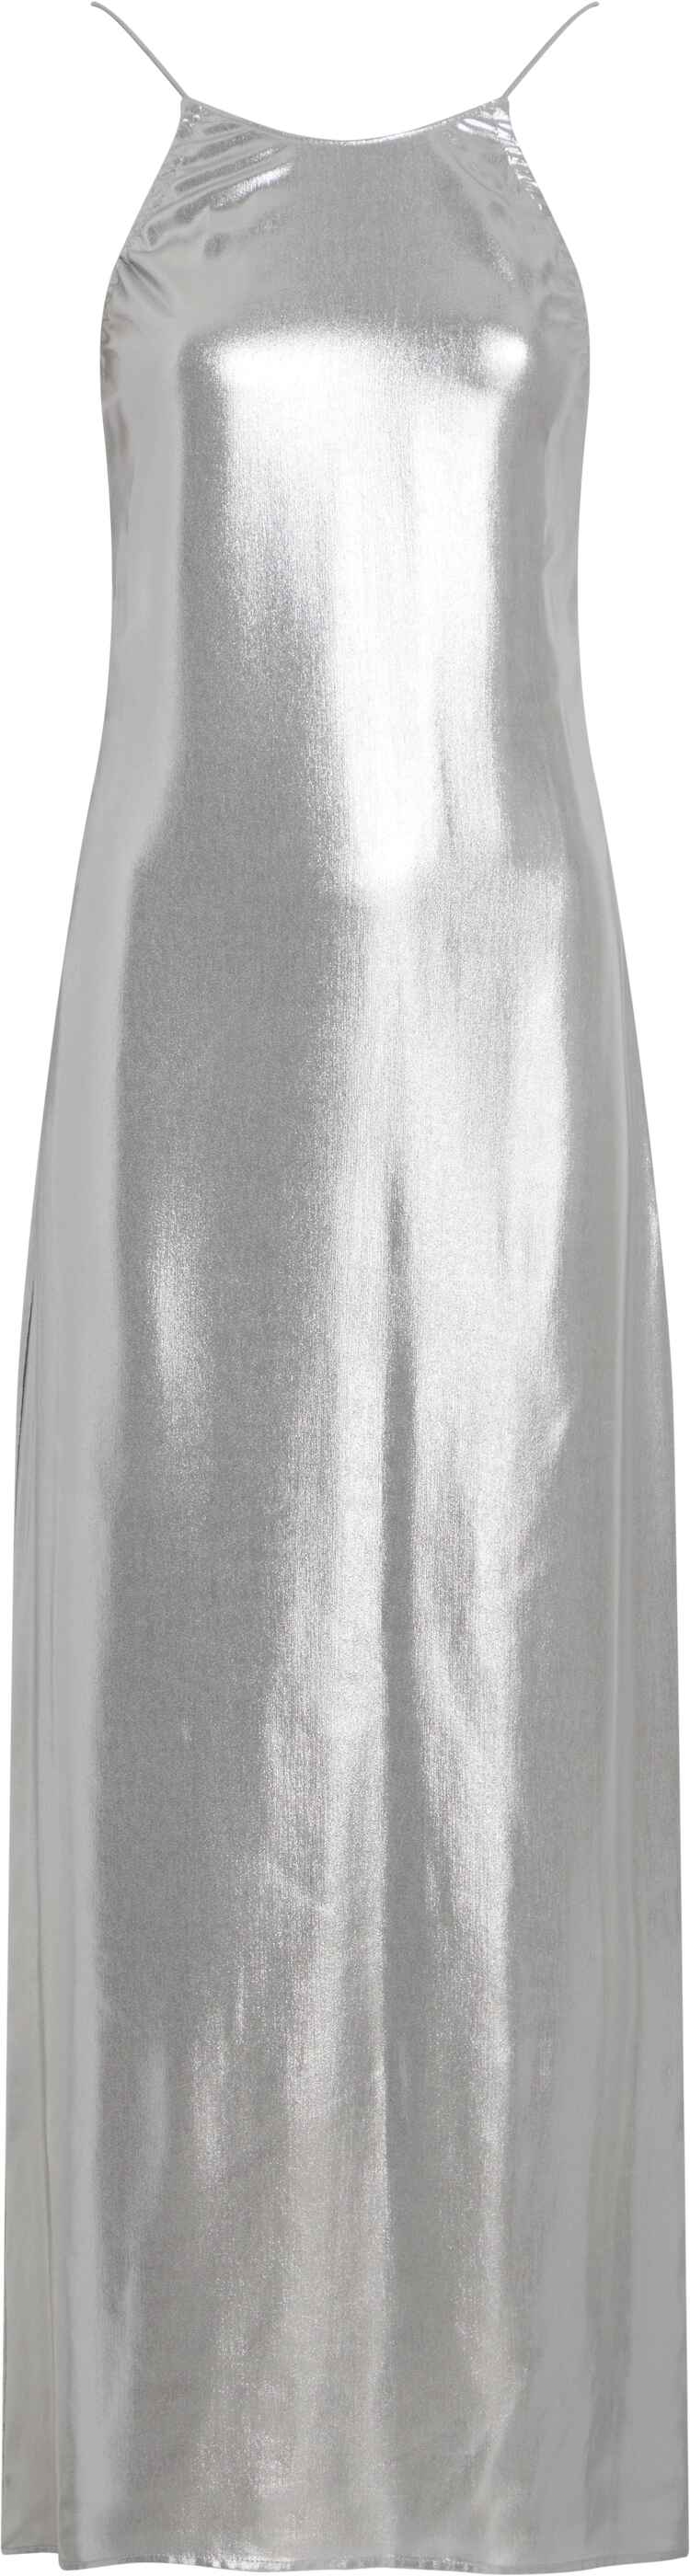 Silver Slip Dress